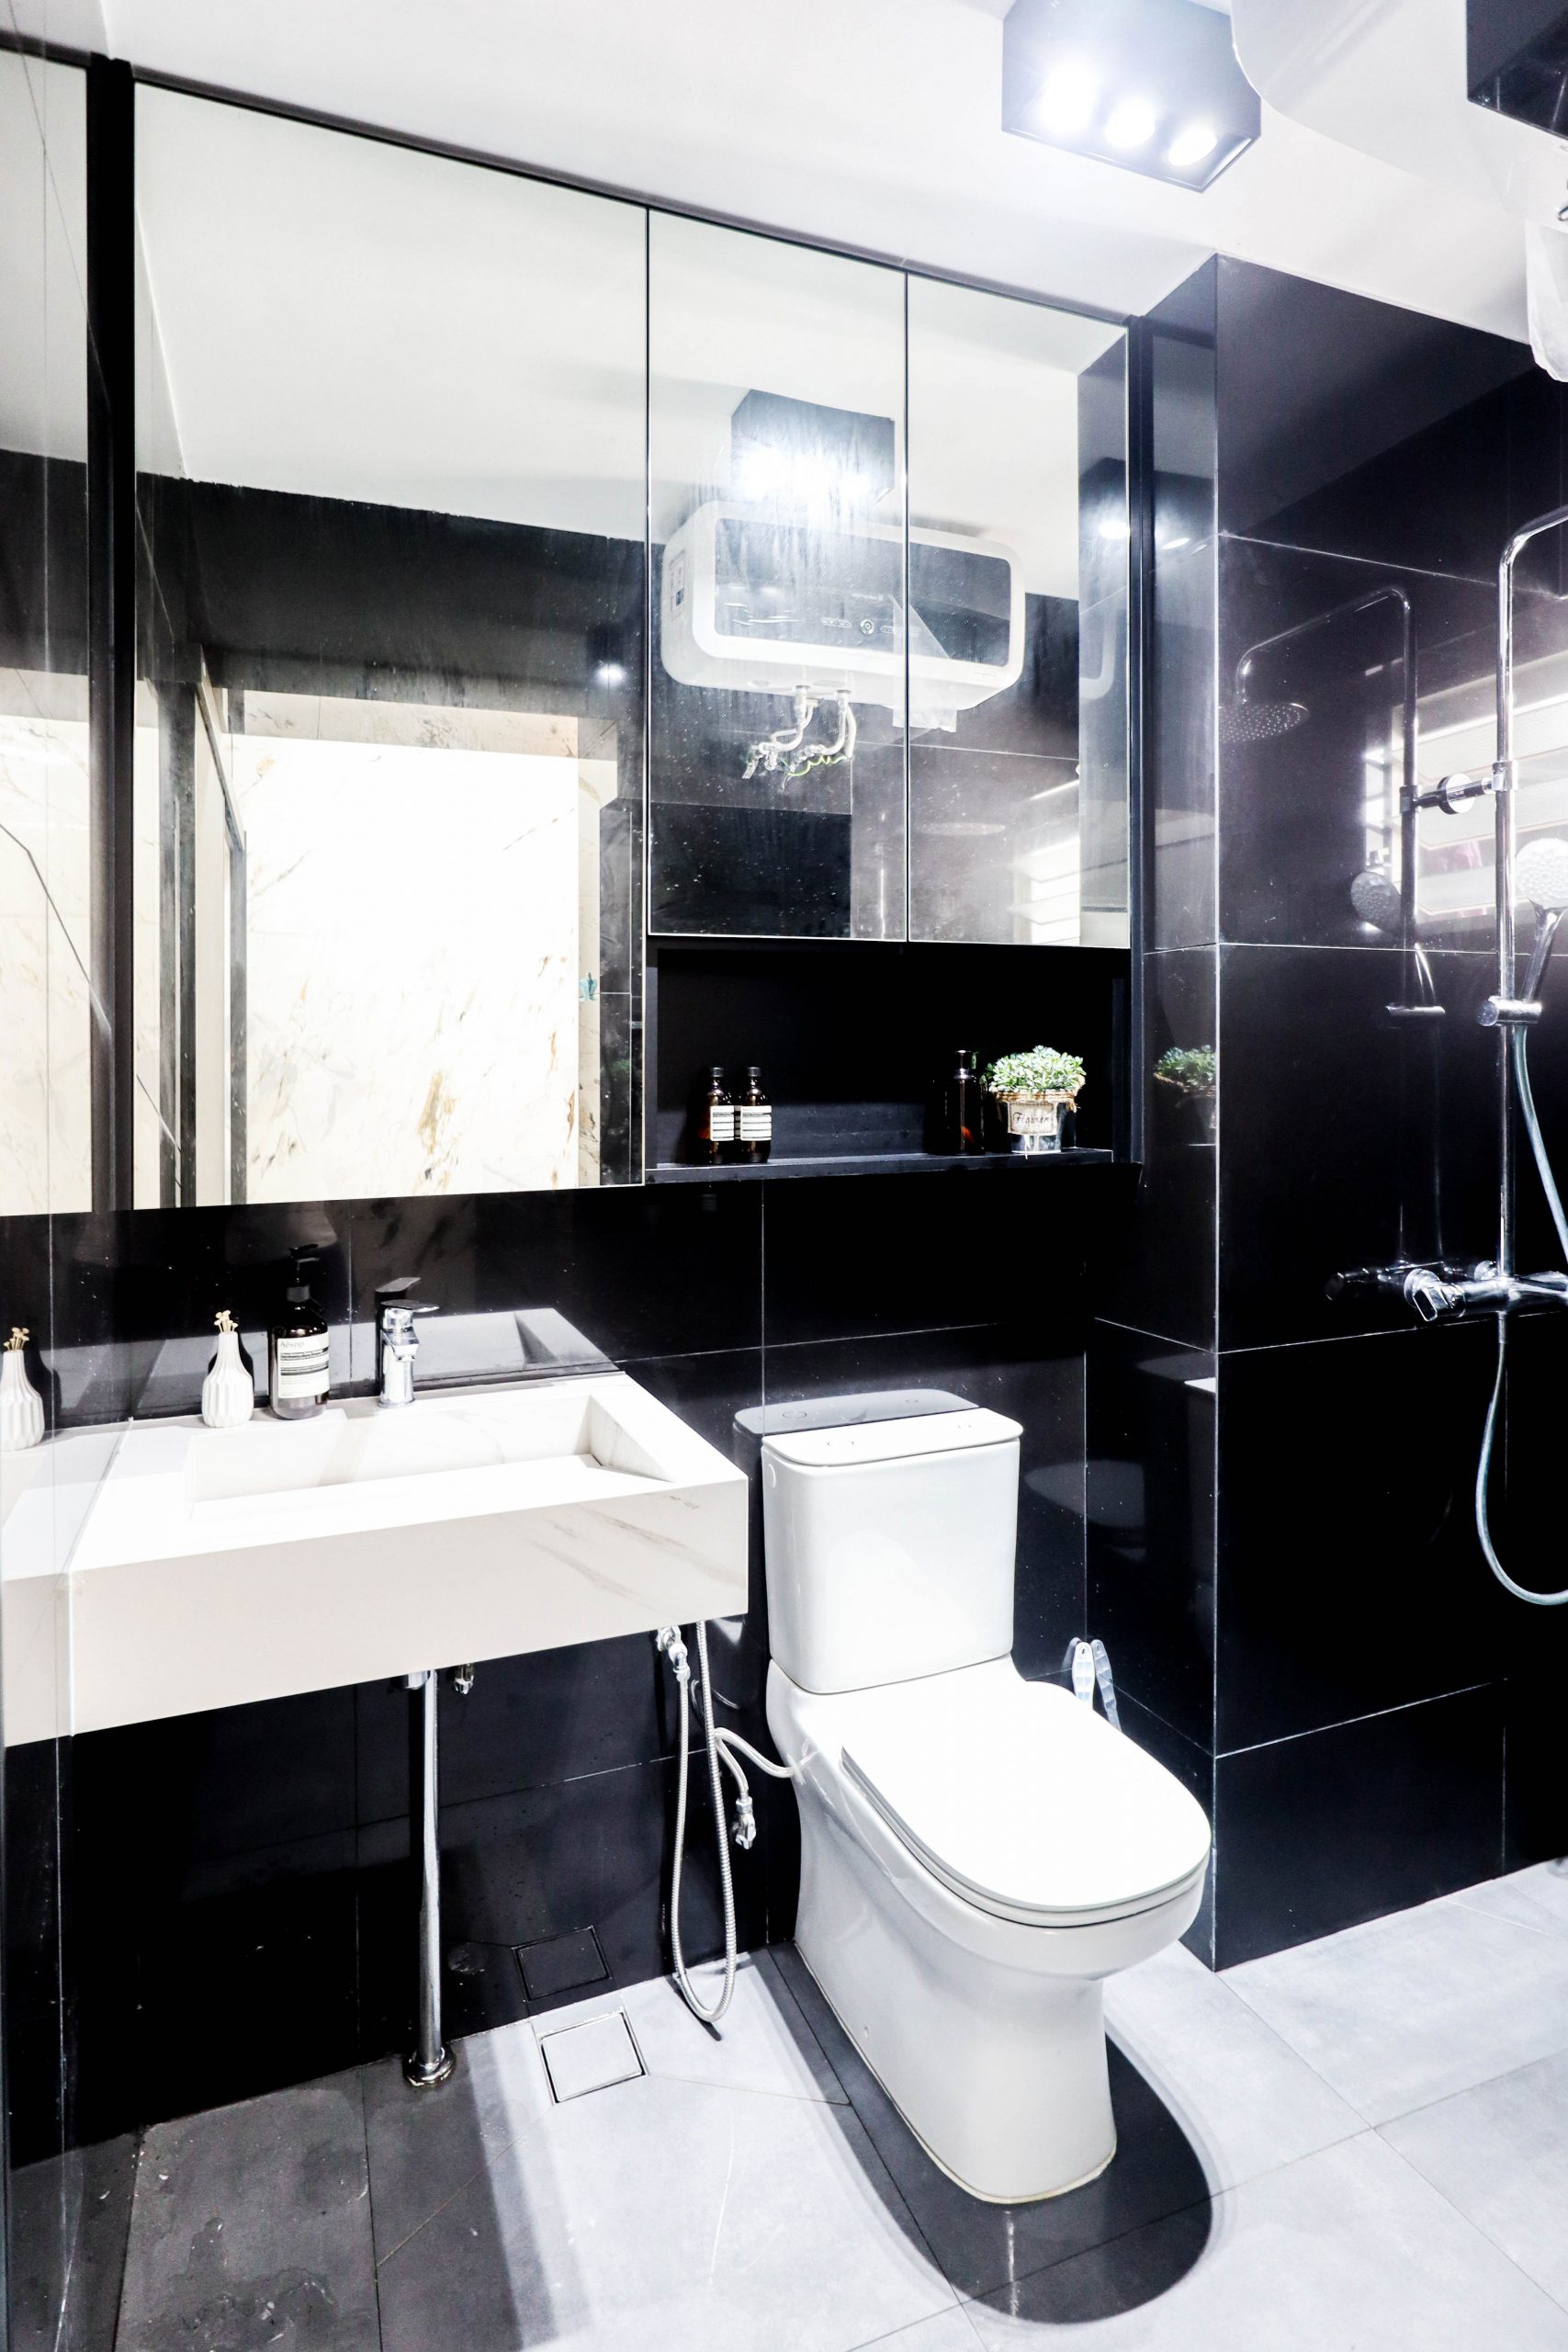 Sleek Minimalist HDB Resale Toilet Renovation Interior Design in Monochrome Theme